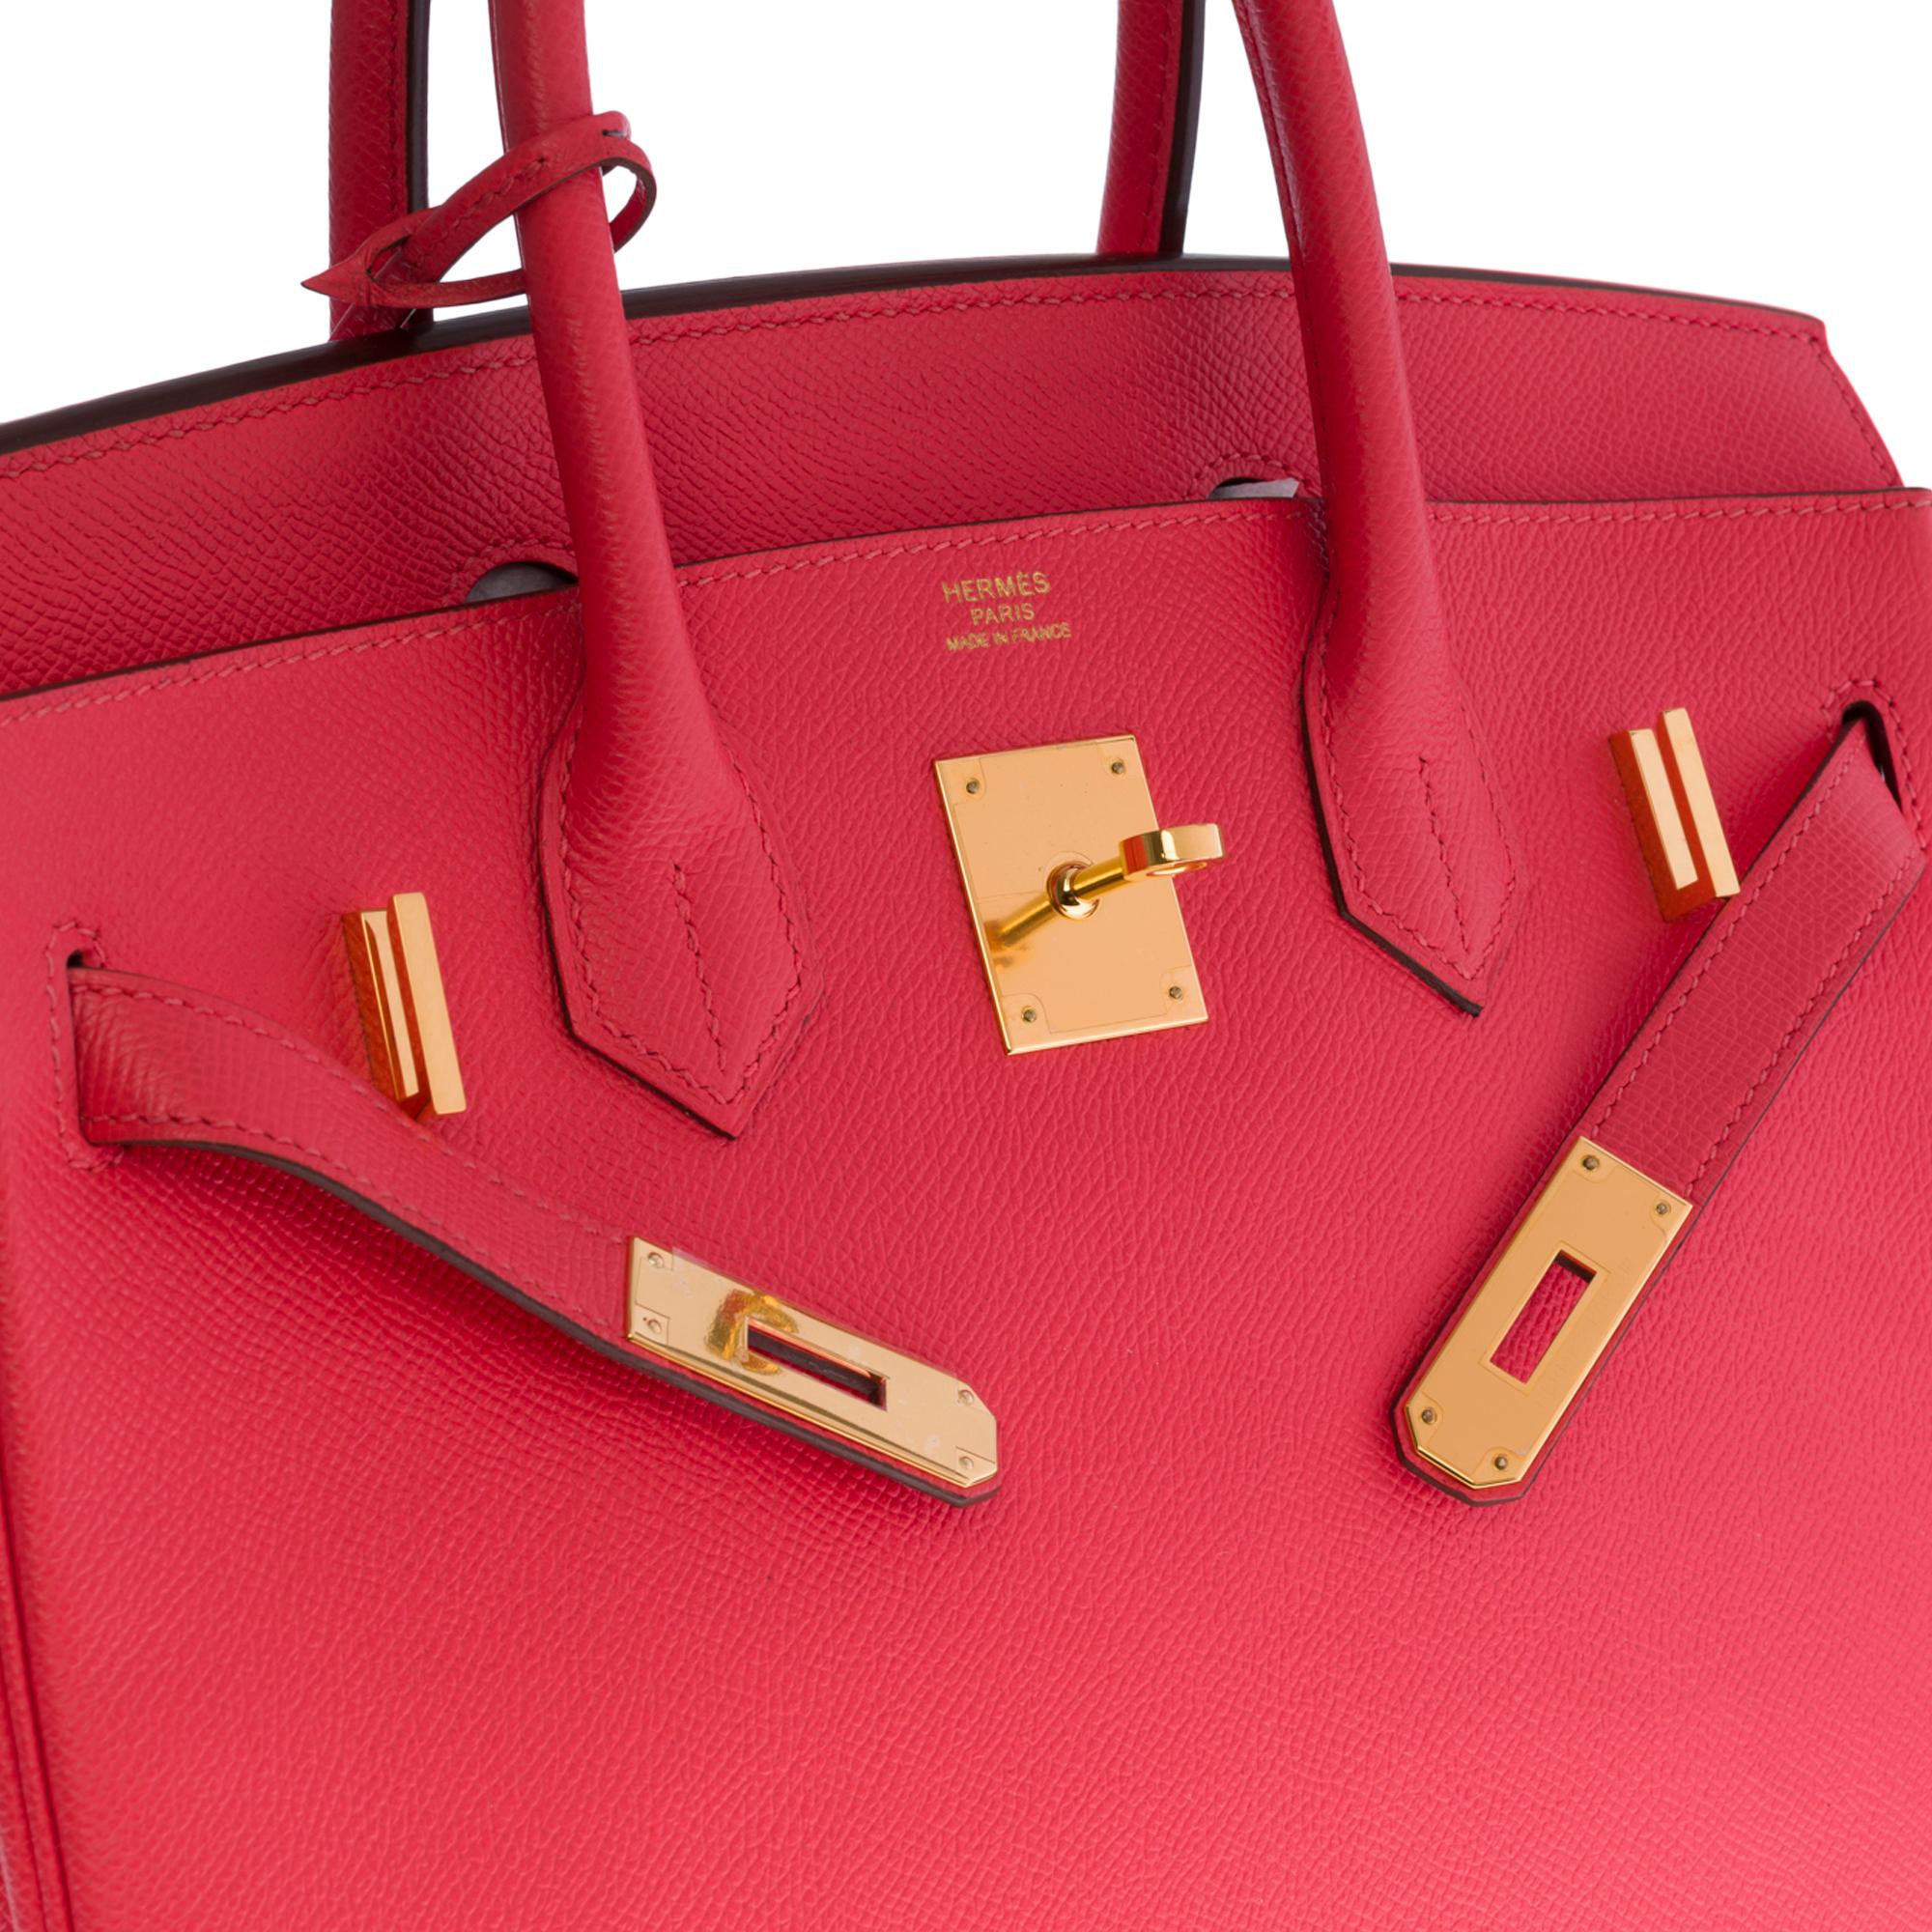 Women's Almost New - Hermès Birkin 30 handbag in Rose Jaïpur Epsom leather, GHW